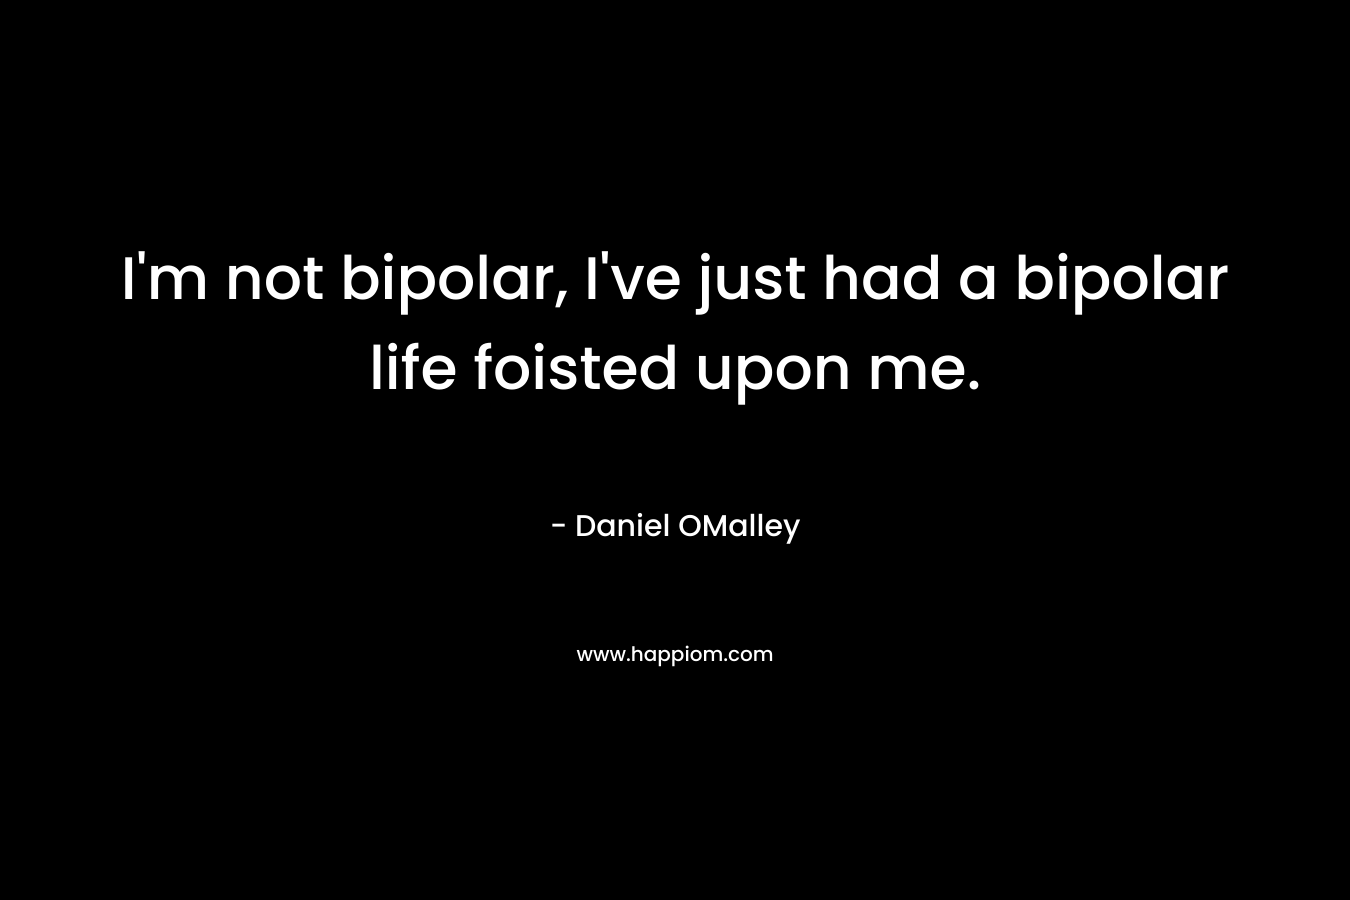 I'm not bipolar, I've just had a bipolar life foisted upon me.